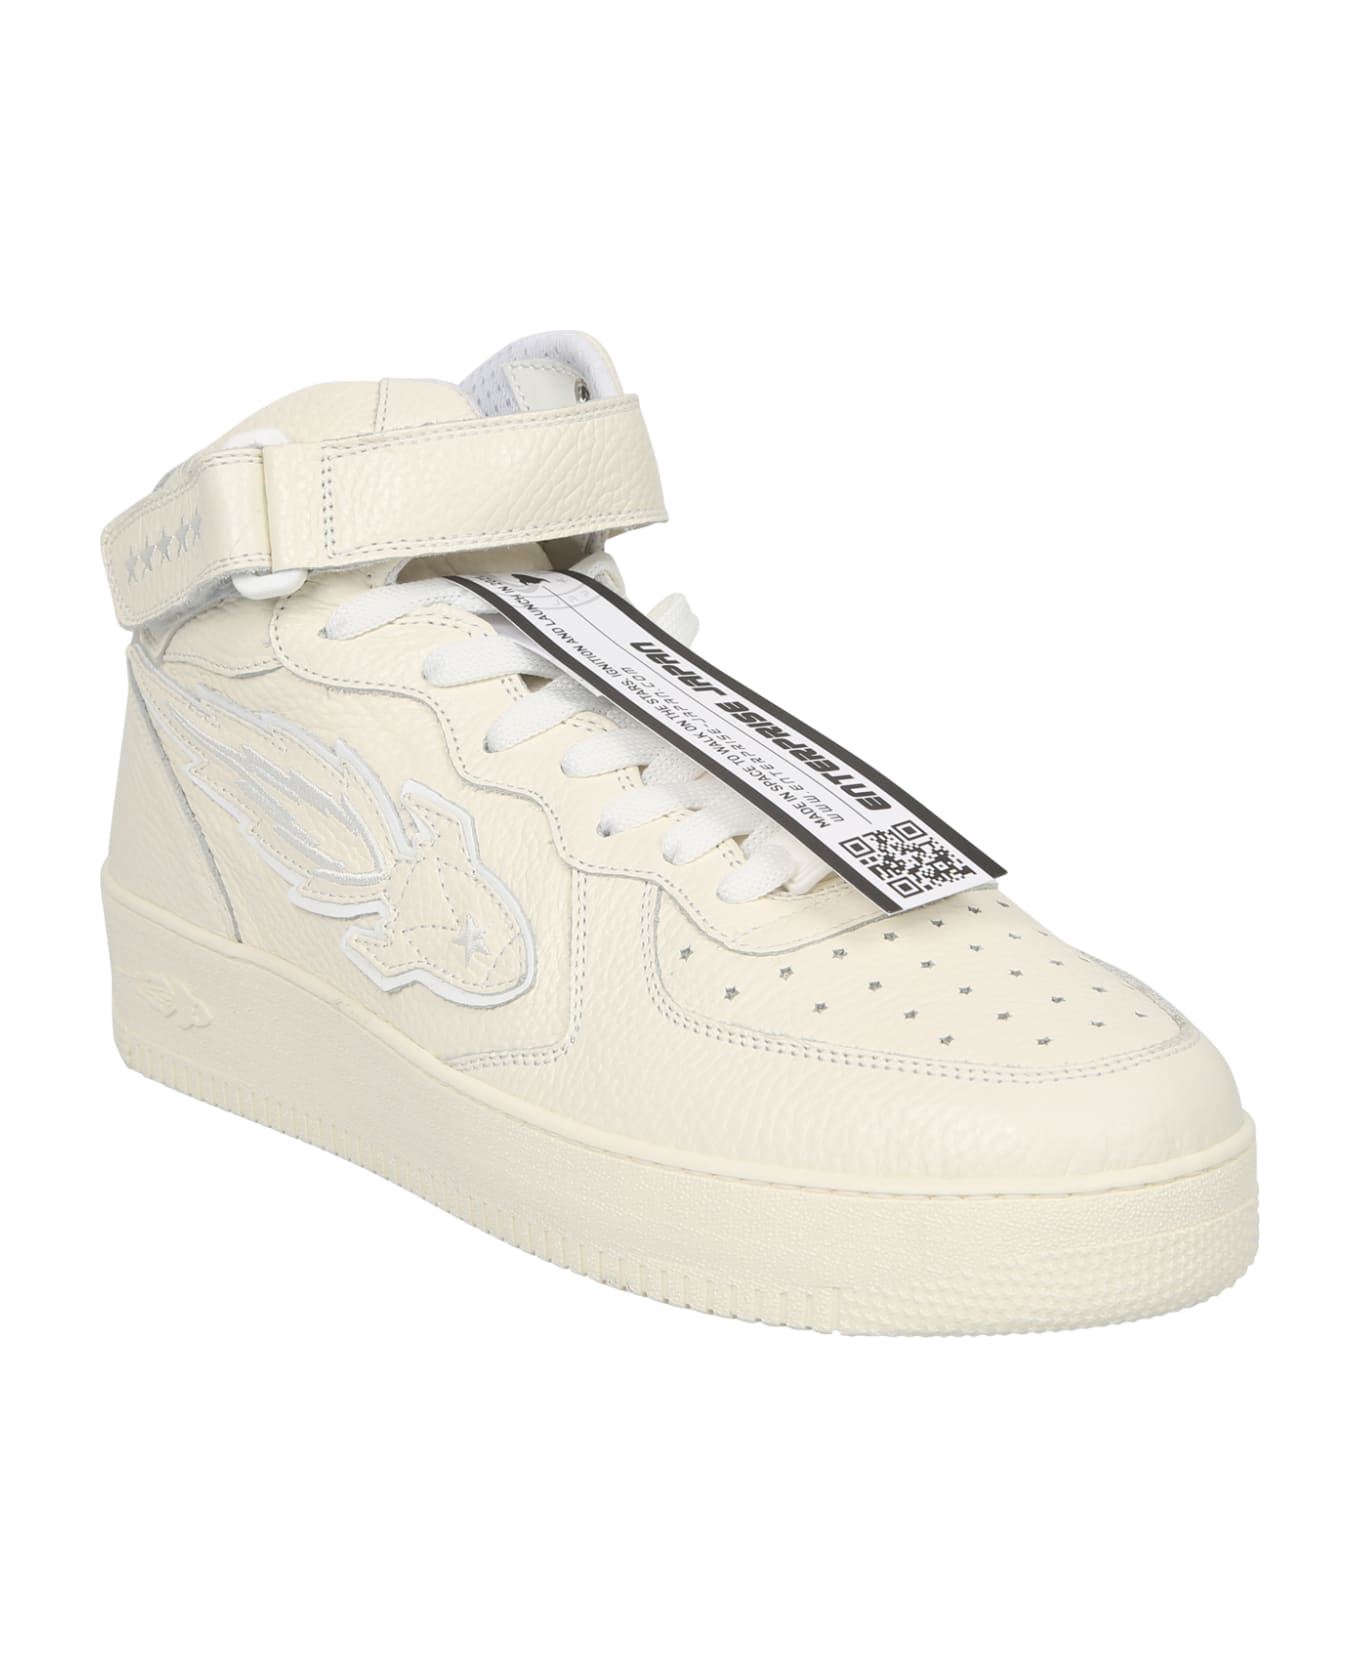 Enterprise Japan Leather Sneakers - White スニーカー